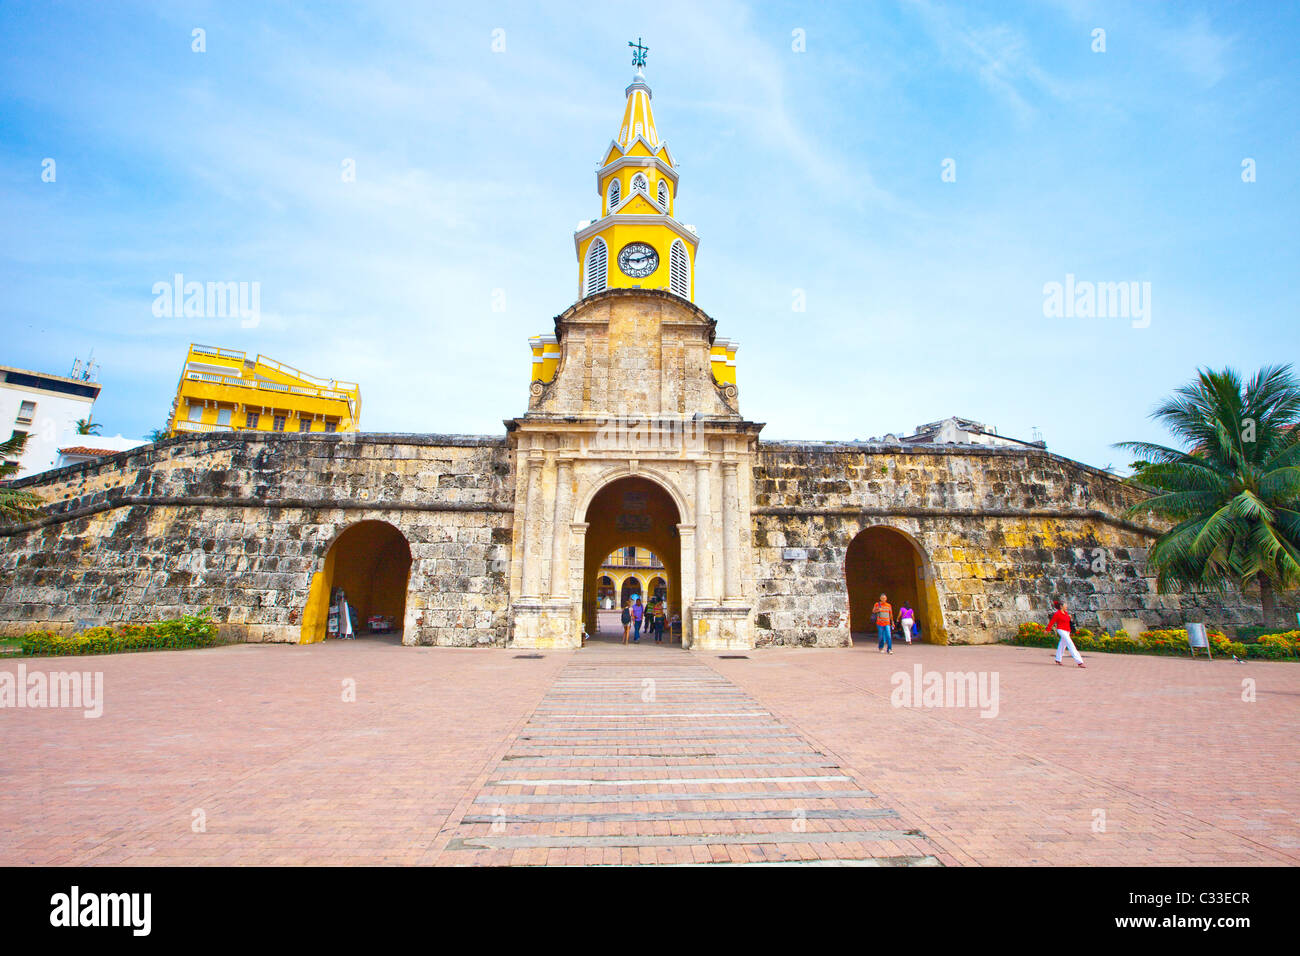 The Clock Tower Gate (or Puerta de Reloj), Cartagena, Colombia Stock Photo  - Alamy